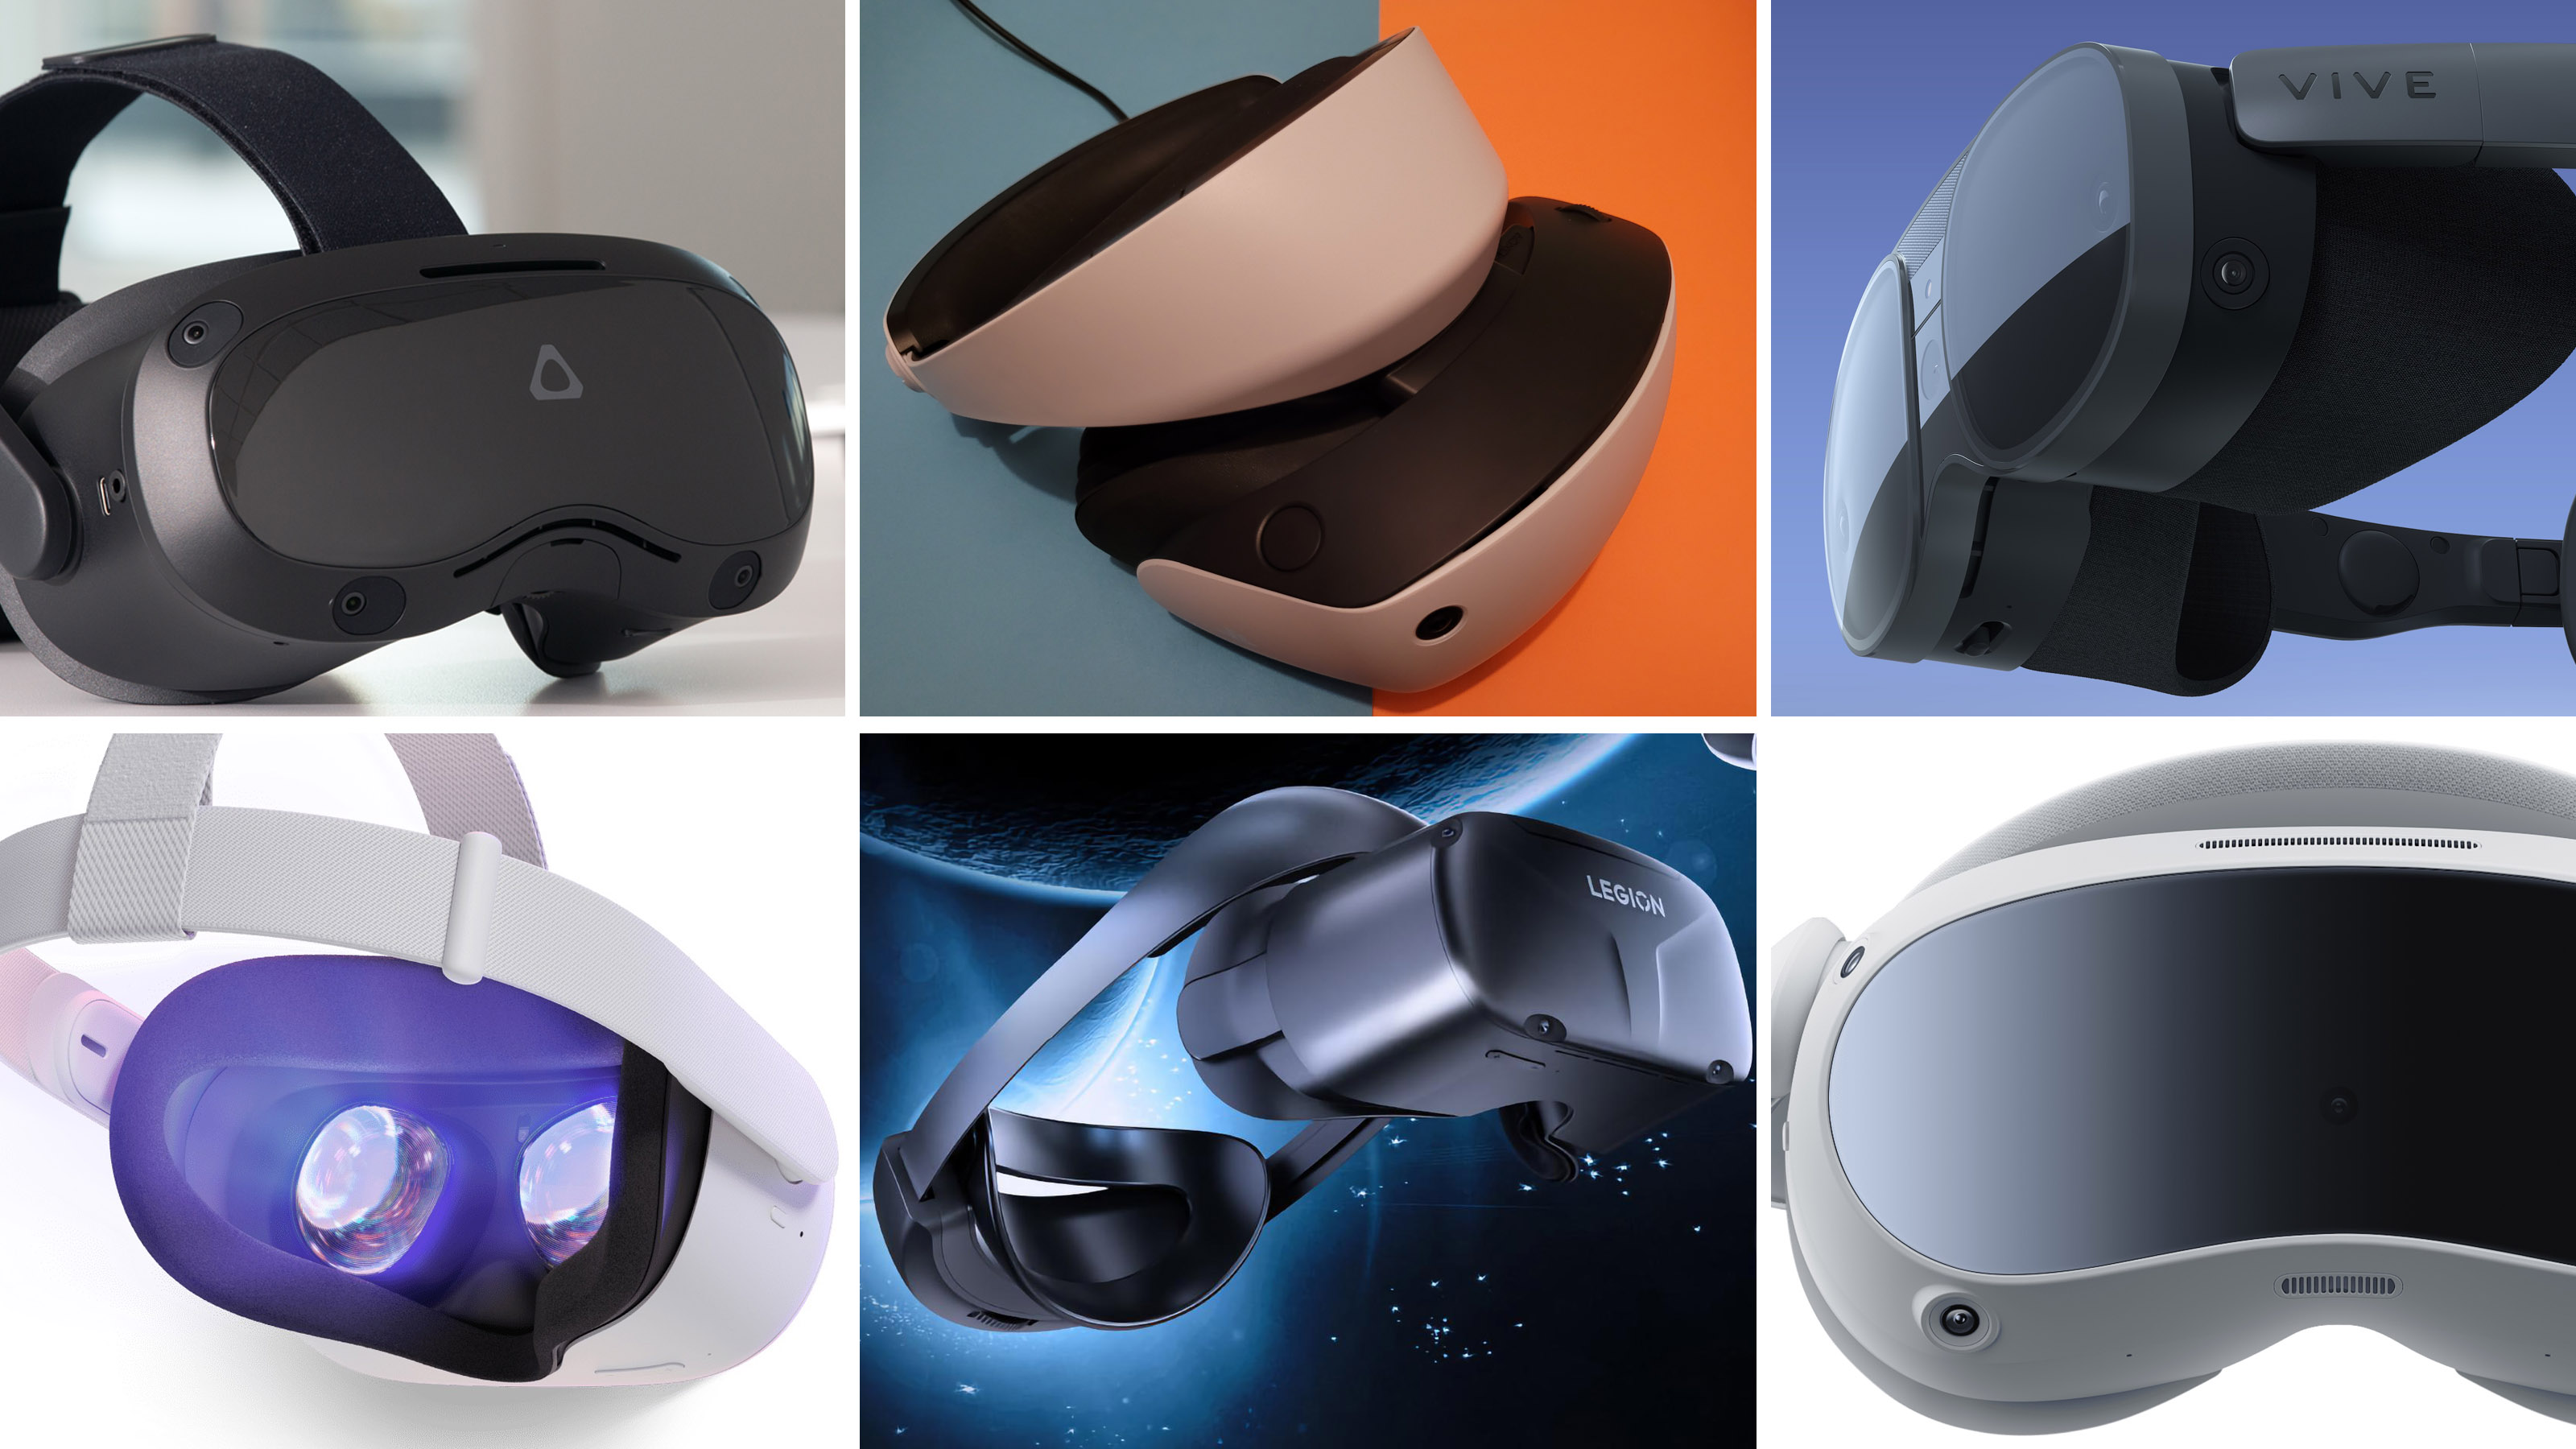 VR-Brille ohne PC & Playstation: Alle Standalone-VR-Headsets im Vergleich |  TechStage